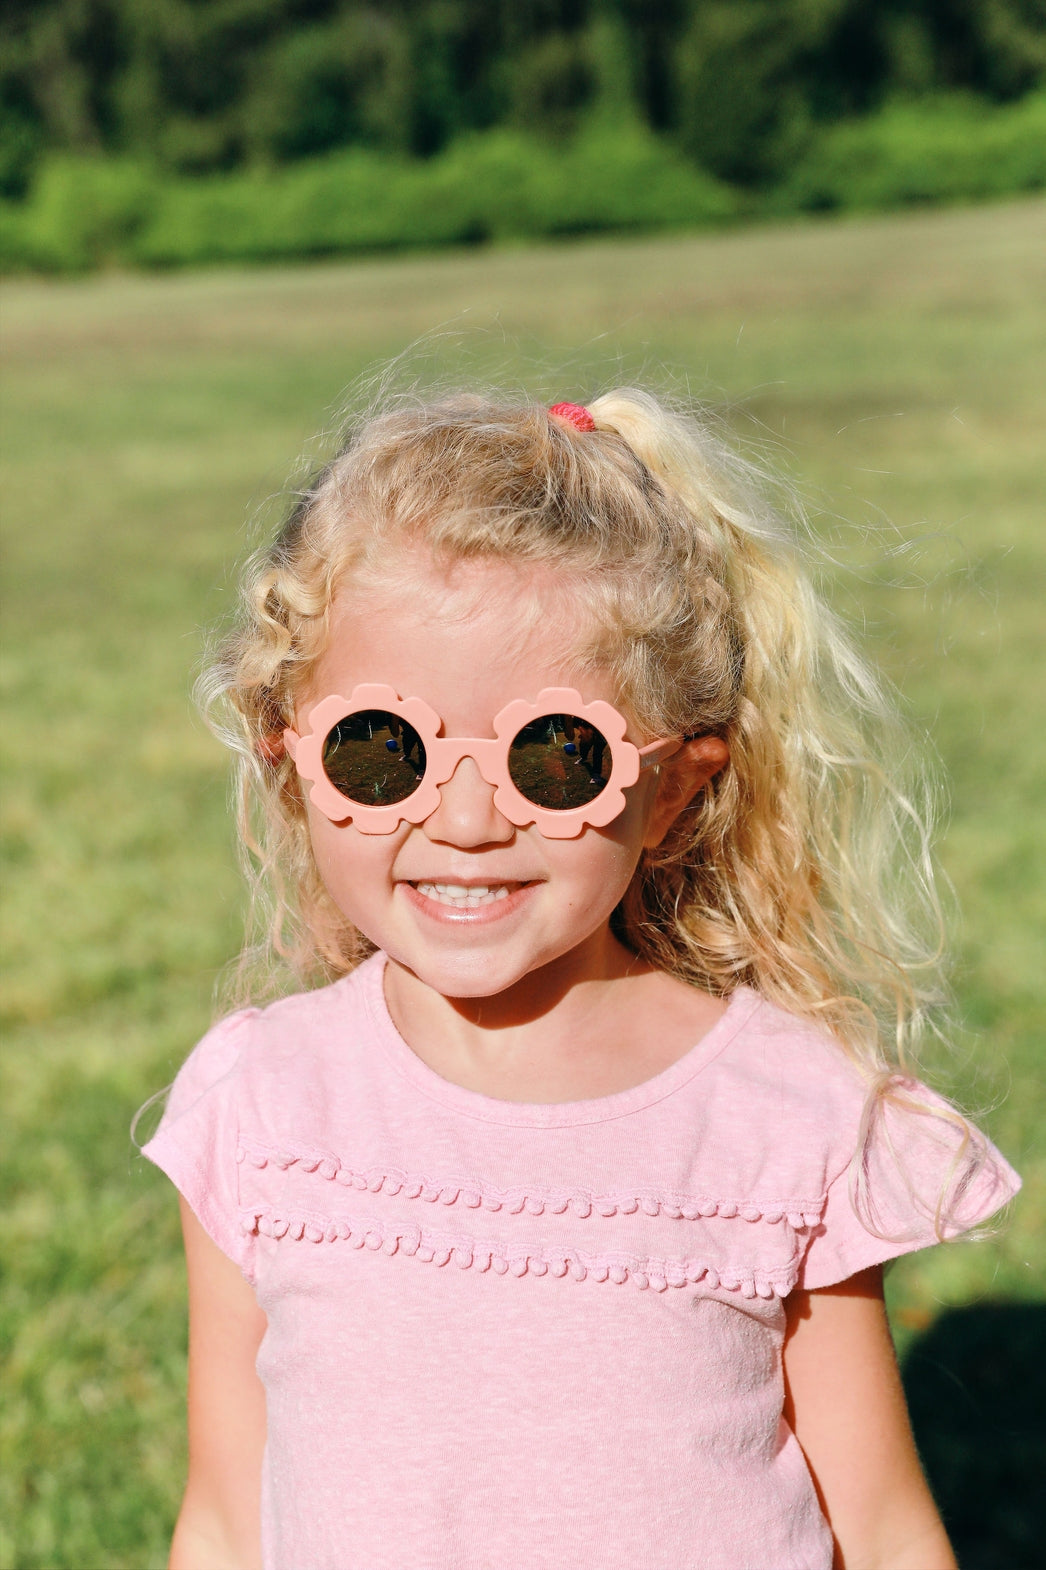 Babiators Original Flower Baby Sunglasses - Peachy Keen